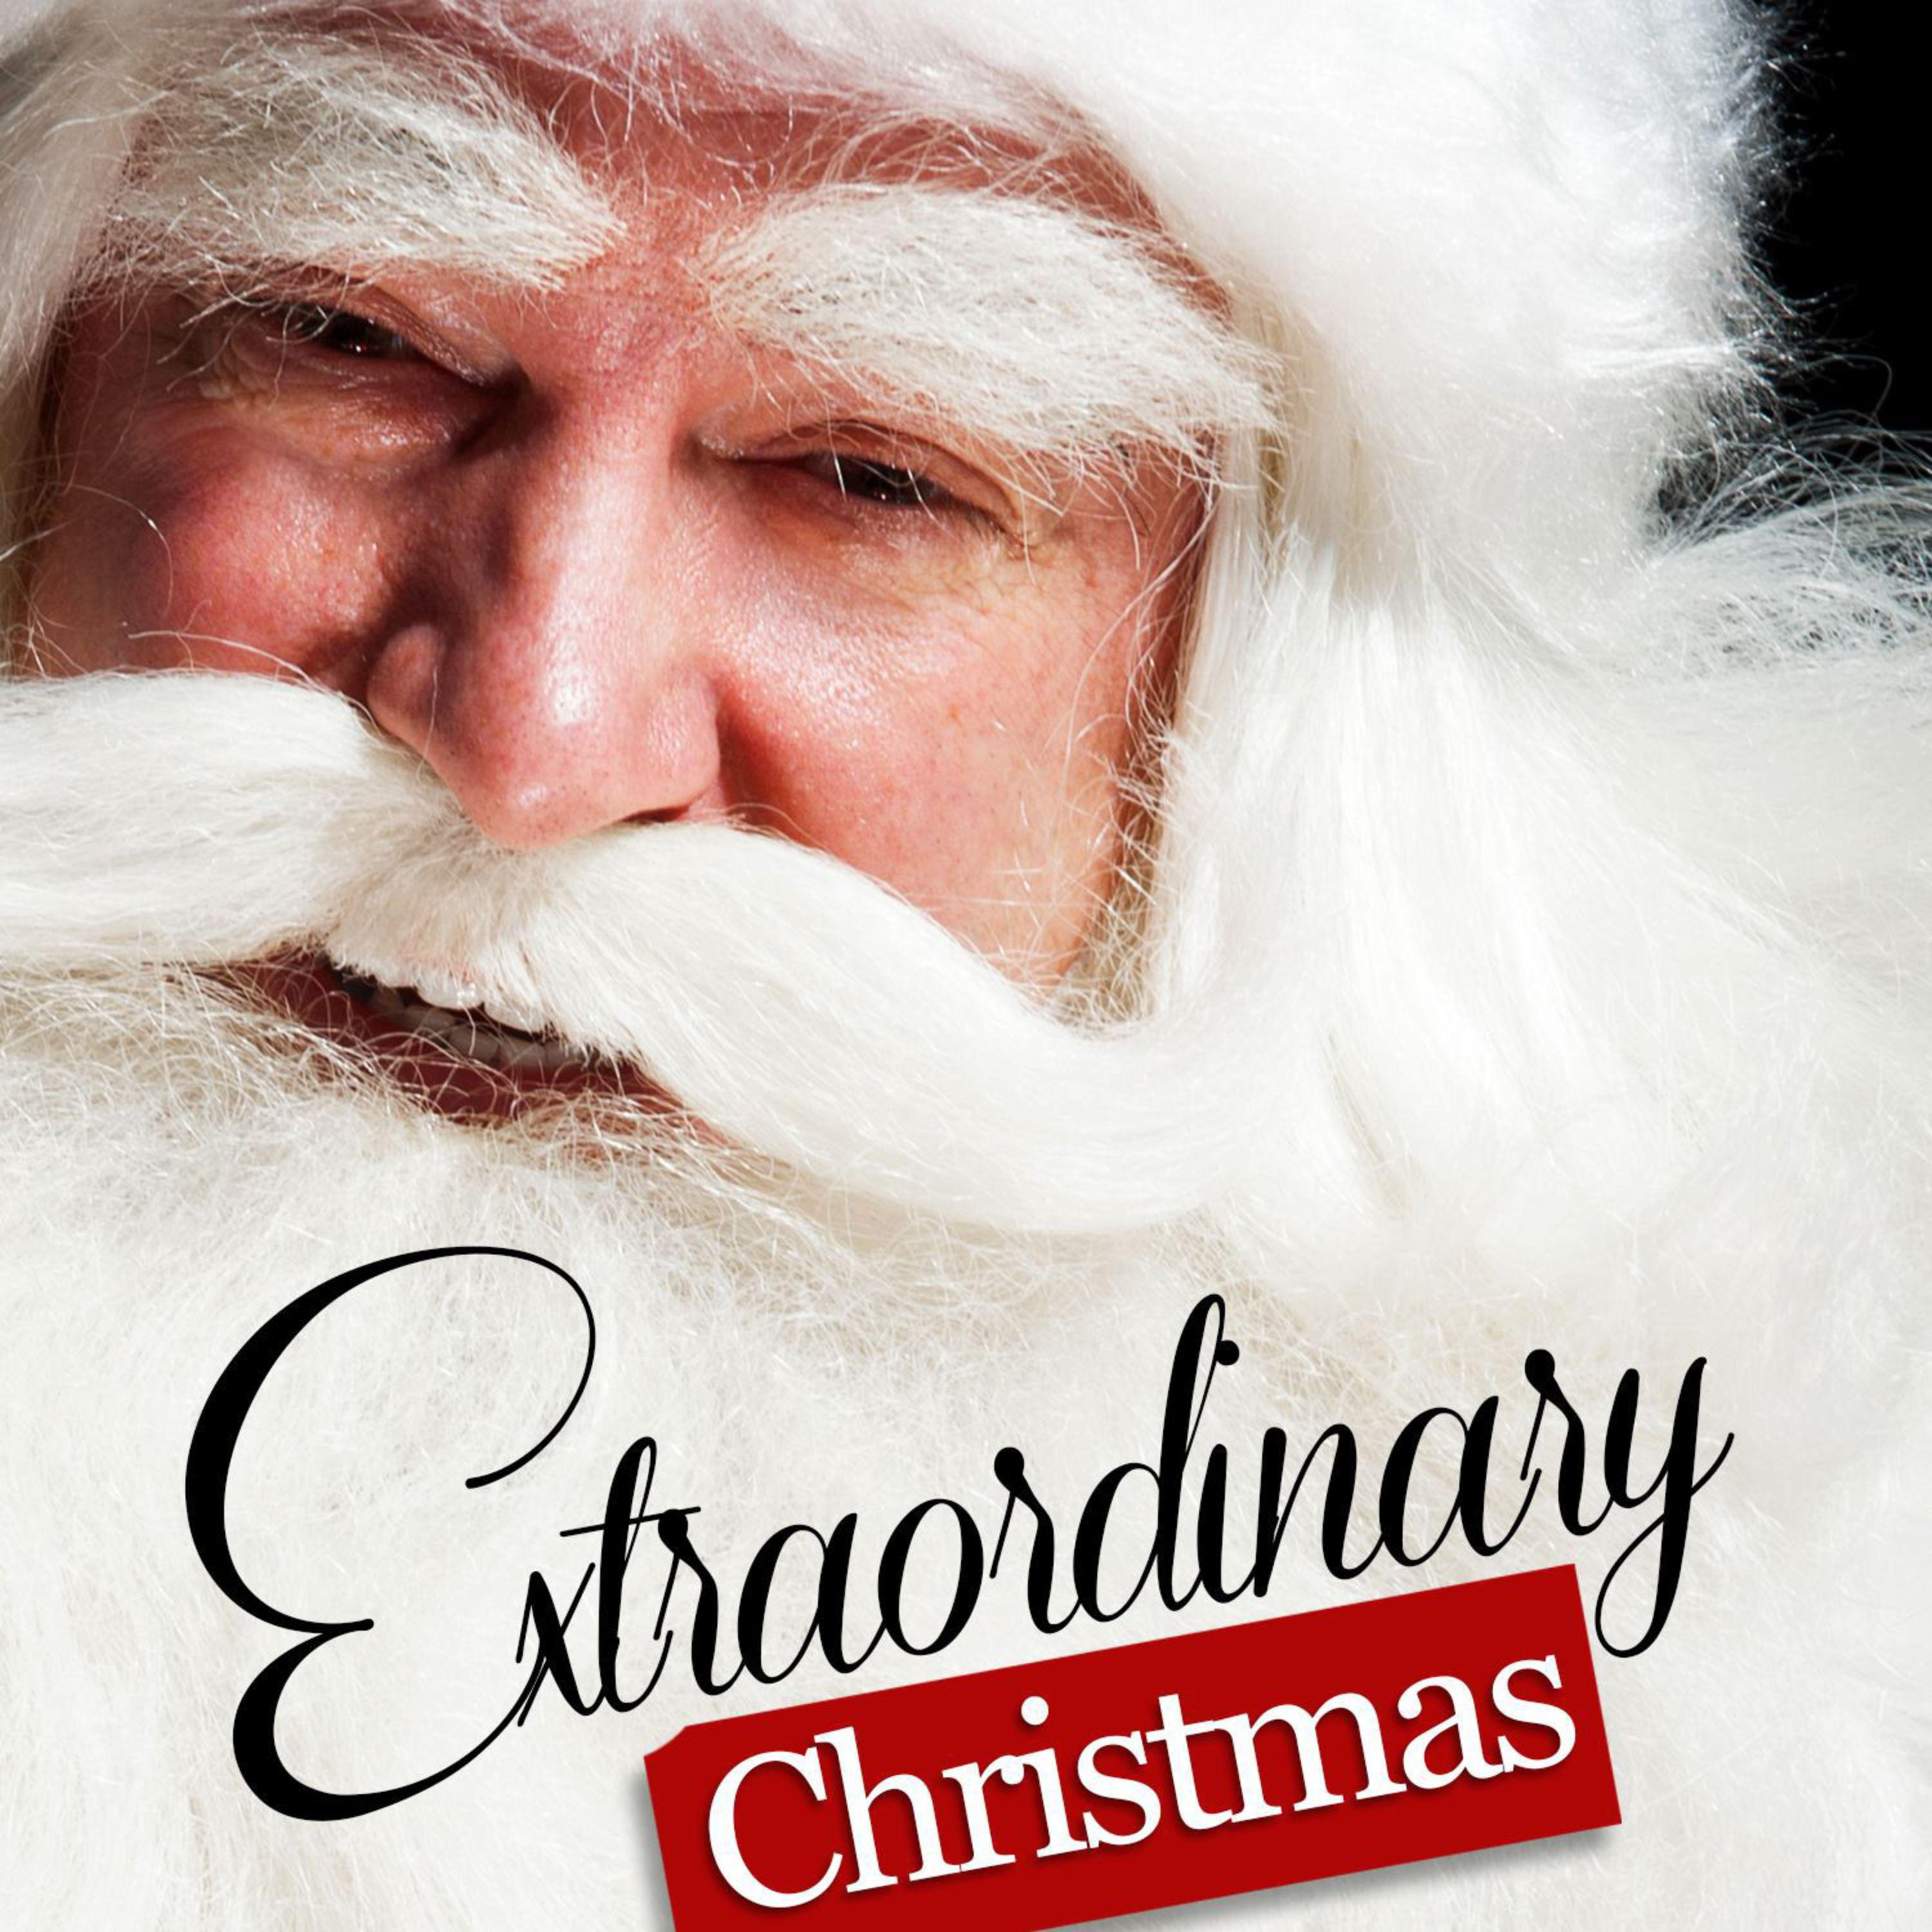 Extraordinary Christmas (Remastered)